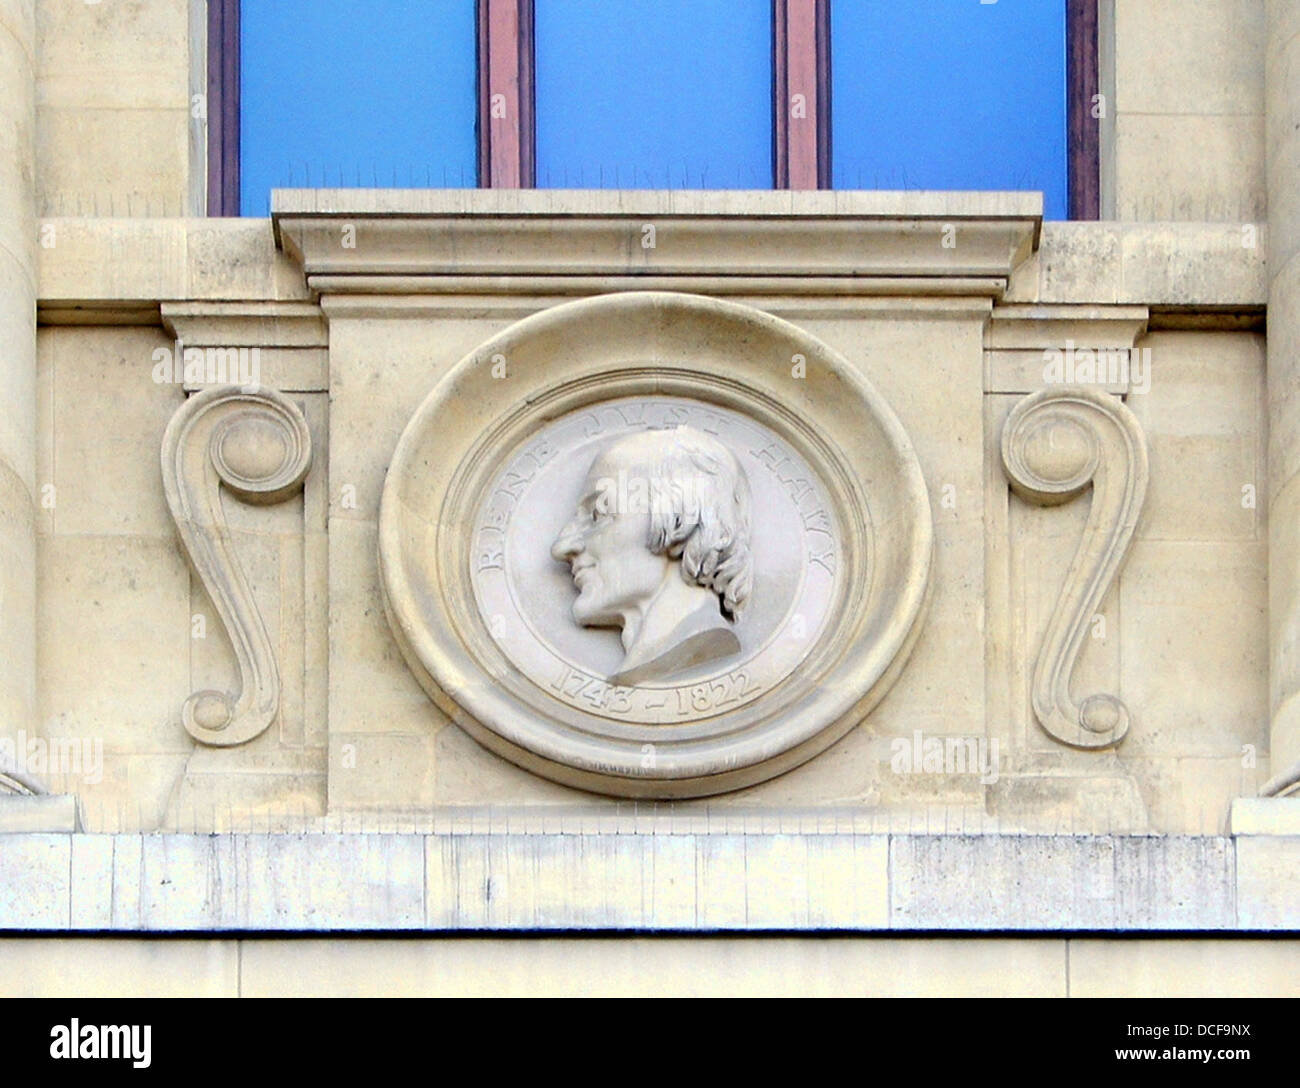 René-Just Haüy. Fourth mascaron (right) on the façade of the Grande galerie de l'Evolution in Jardin des Plantes in Paris Stock Photo